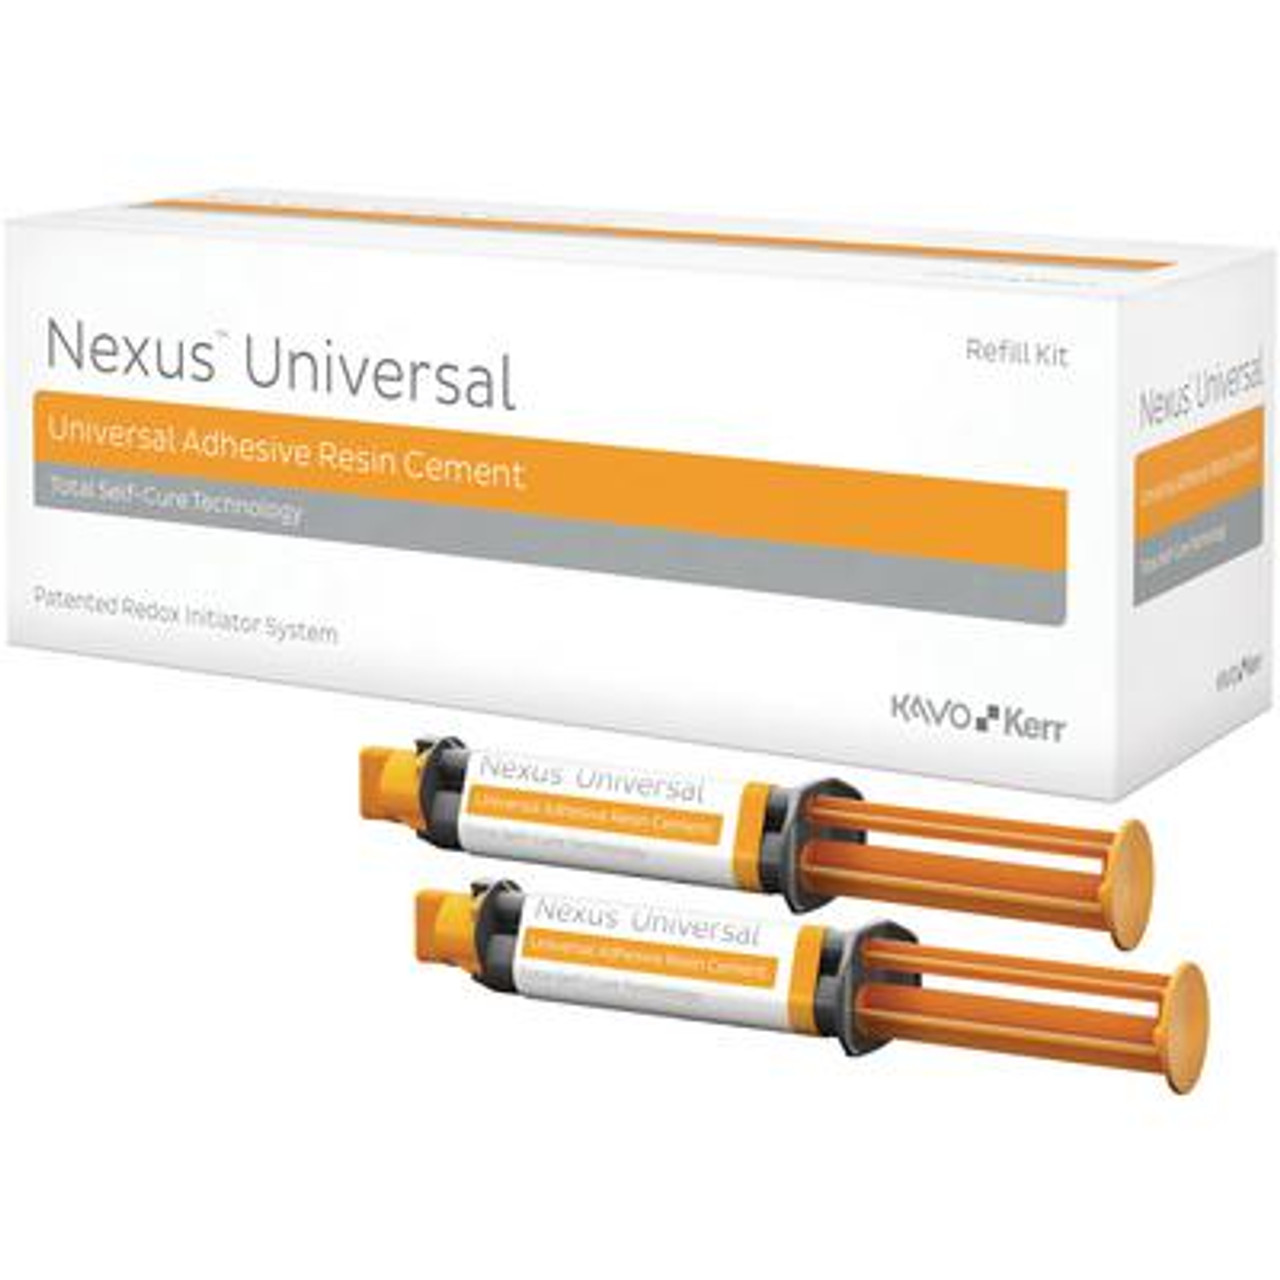 Kerr NEXUS Universal Refill Kit, Yellow